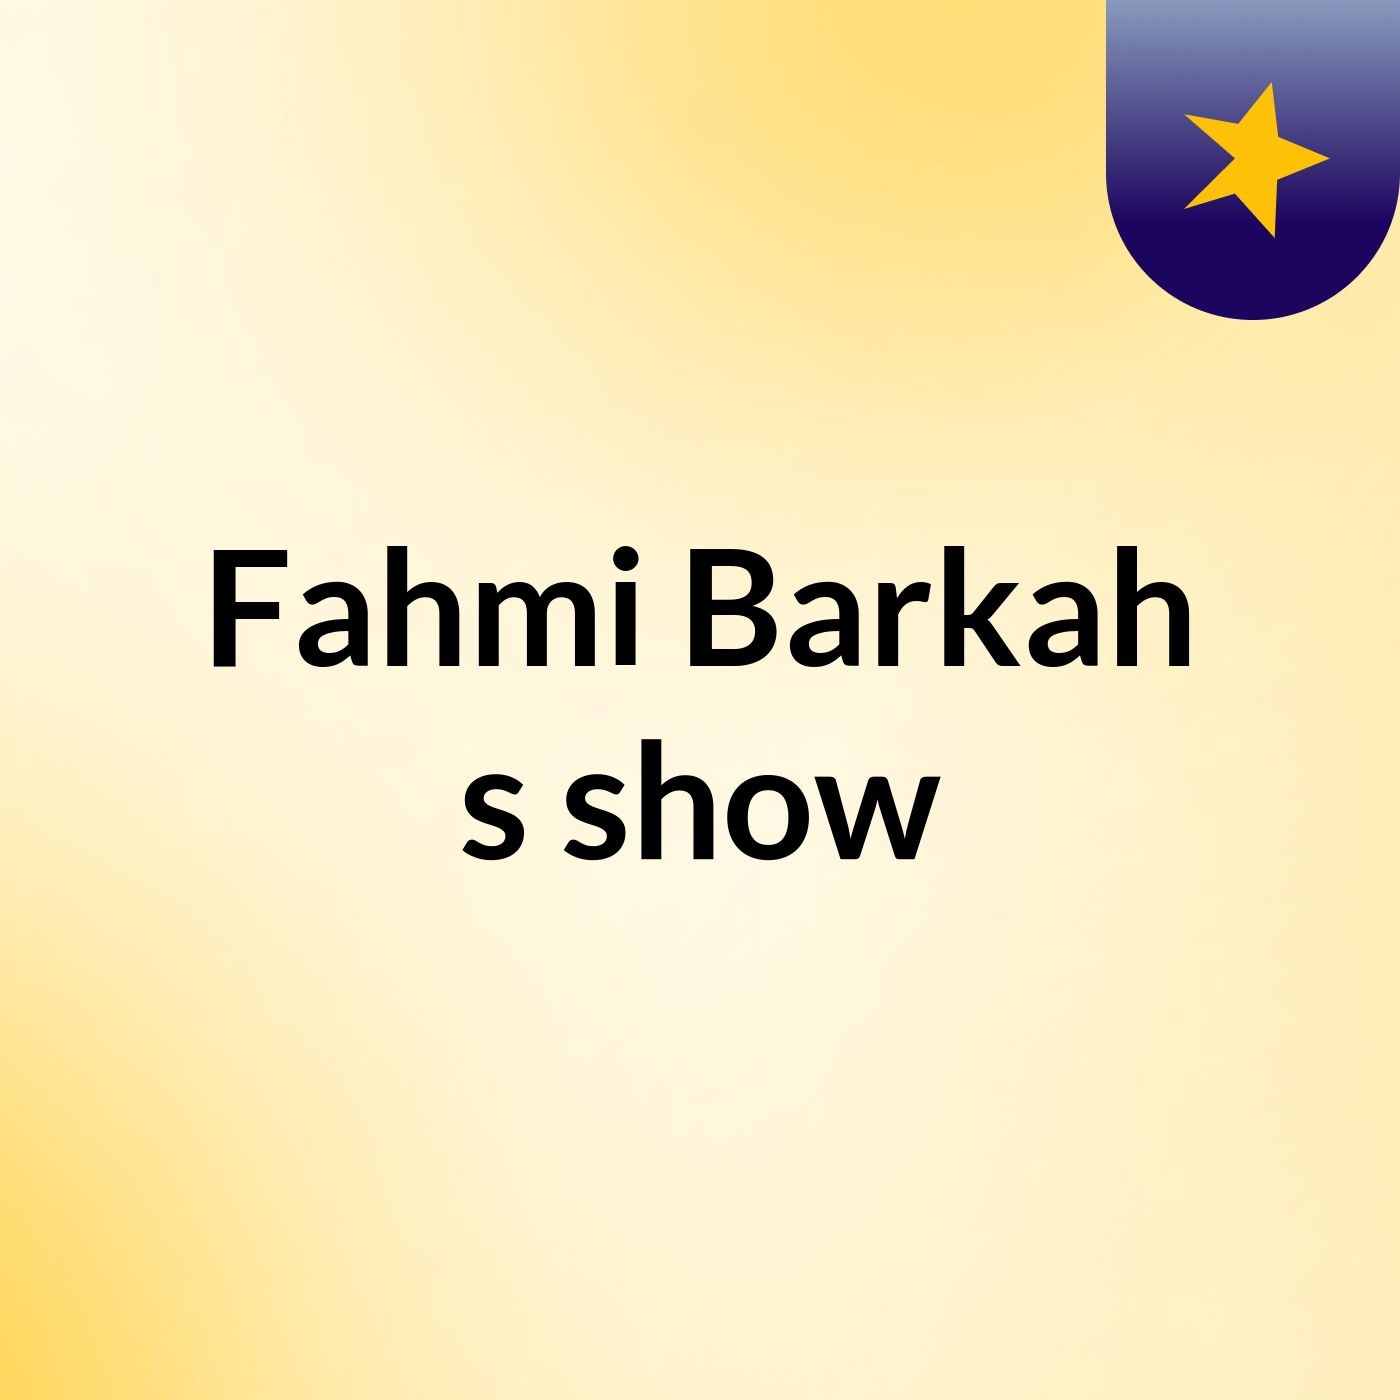 Fahmi Barkah's show